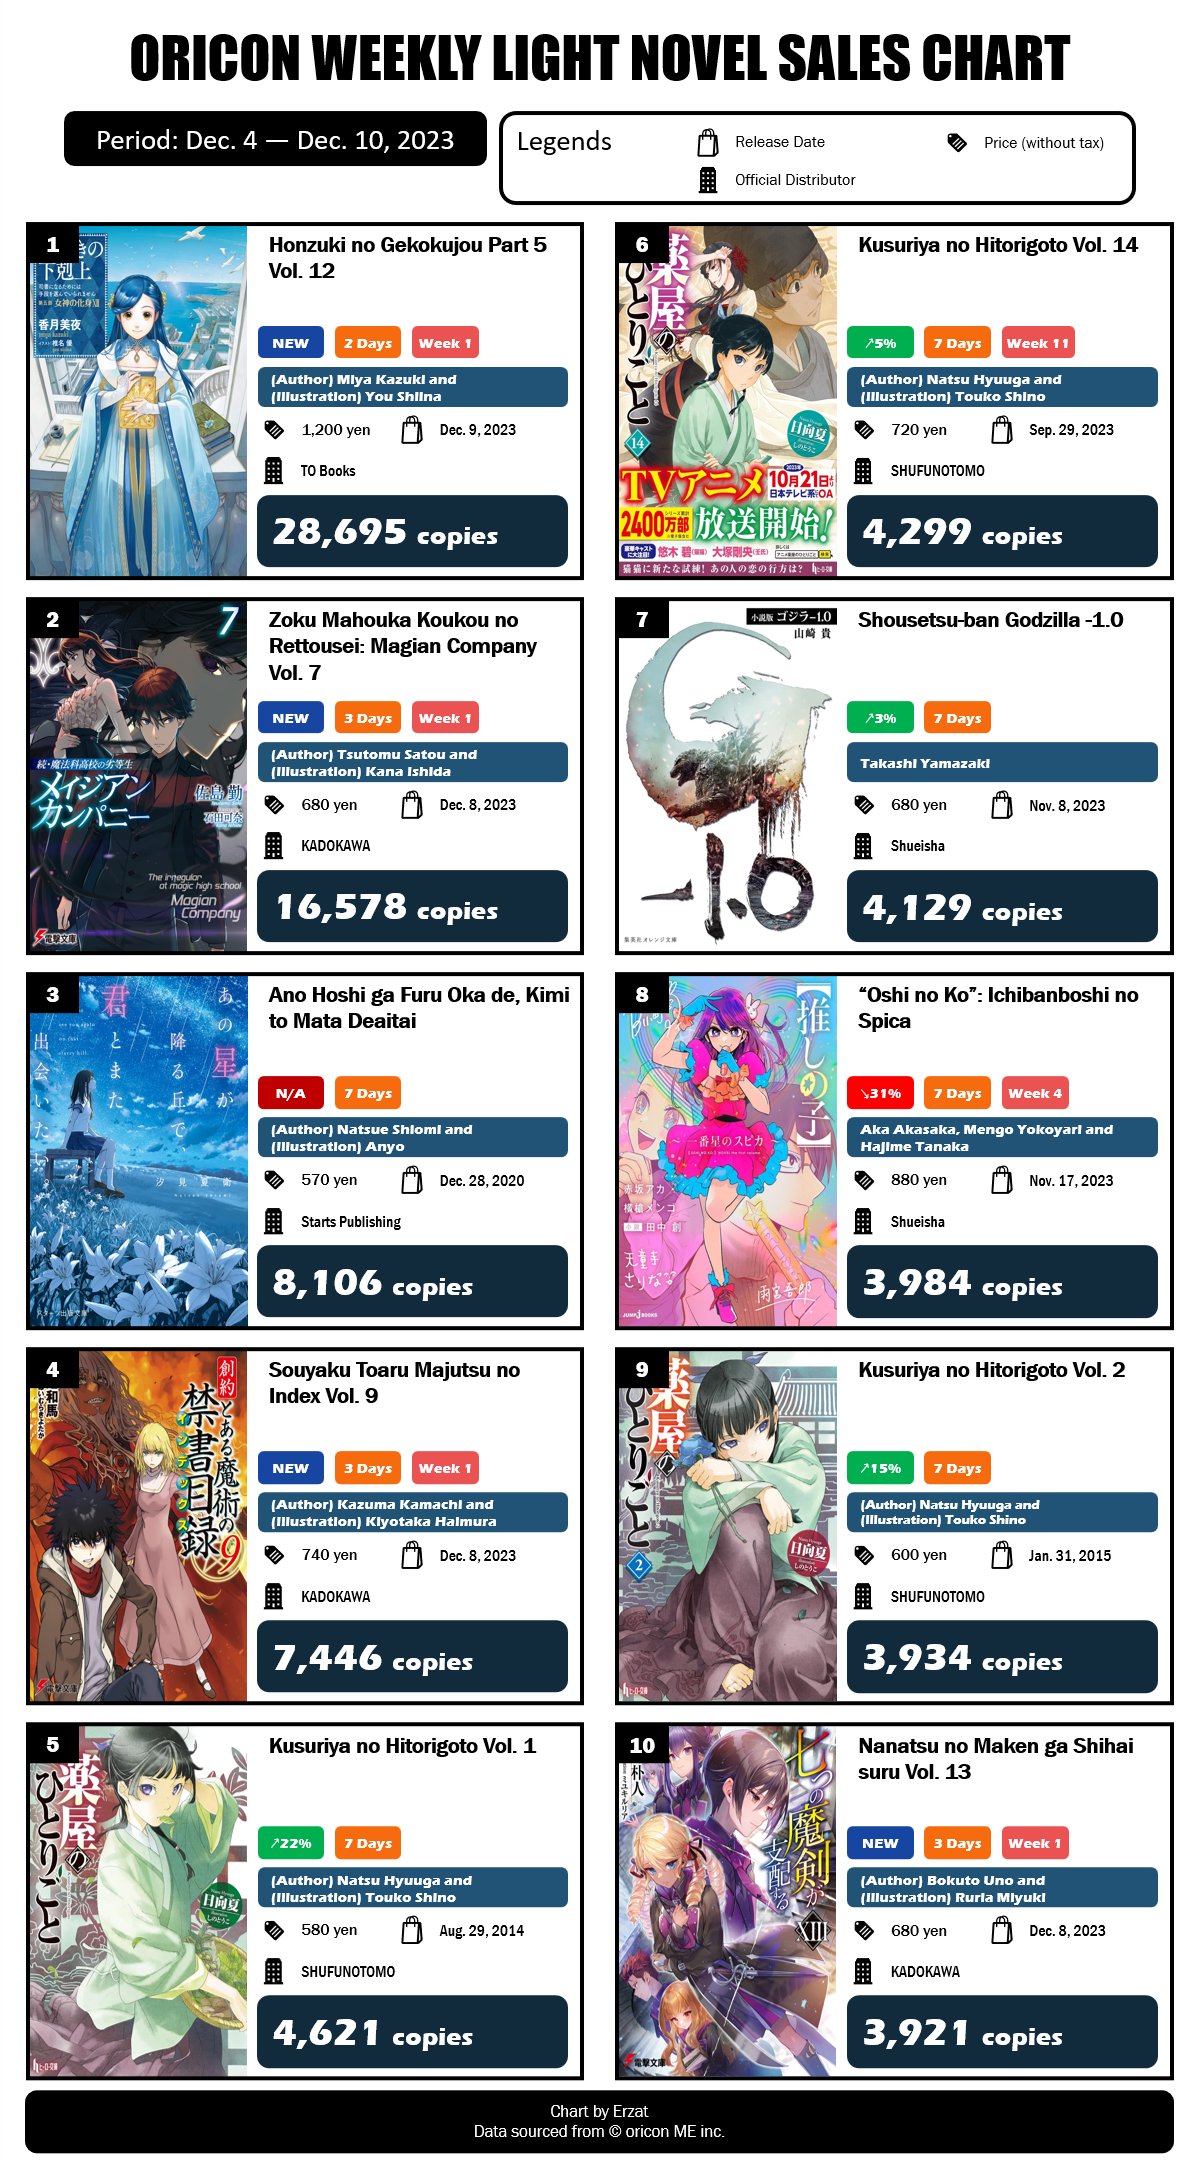 Japan Top 10 Weekly Anime Blu-ray and DVD Sales Ranking: November 28 –  December 4, 2022 - Erzat